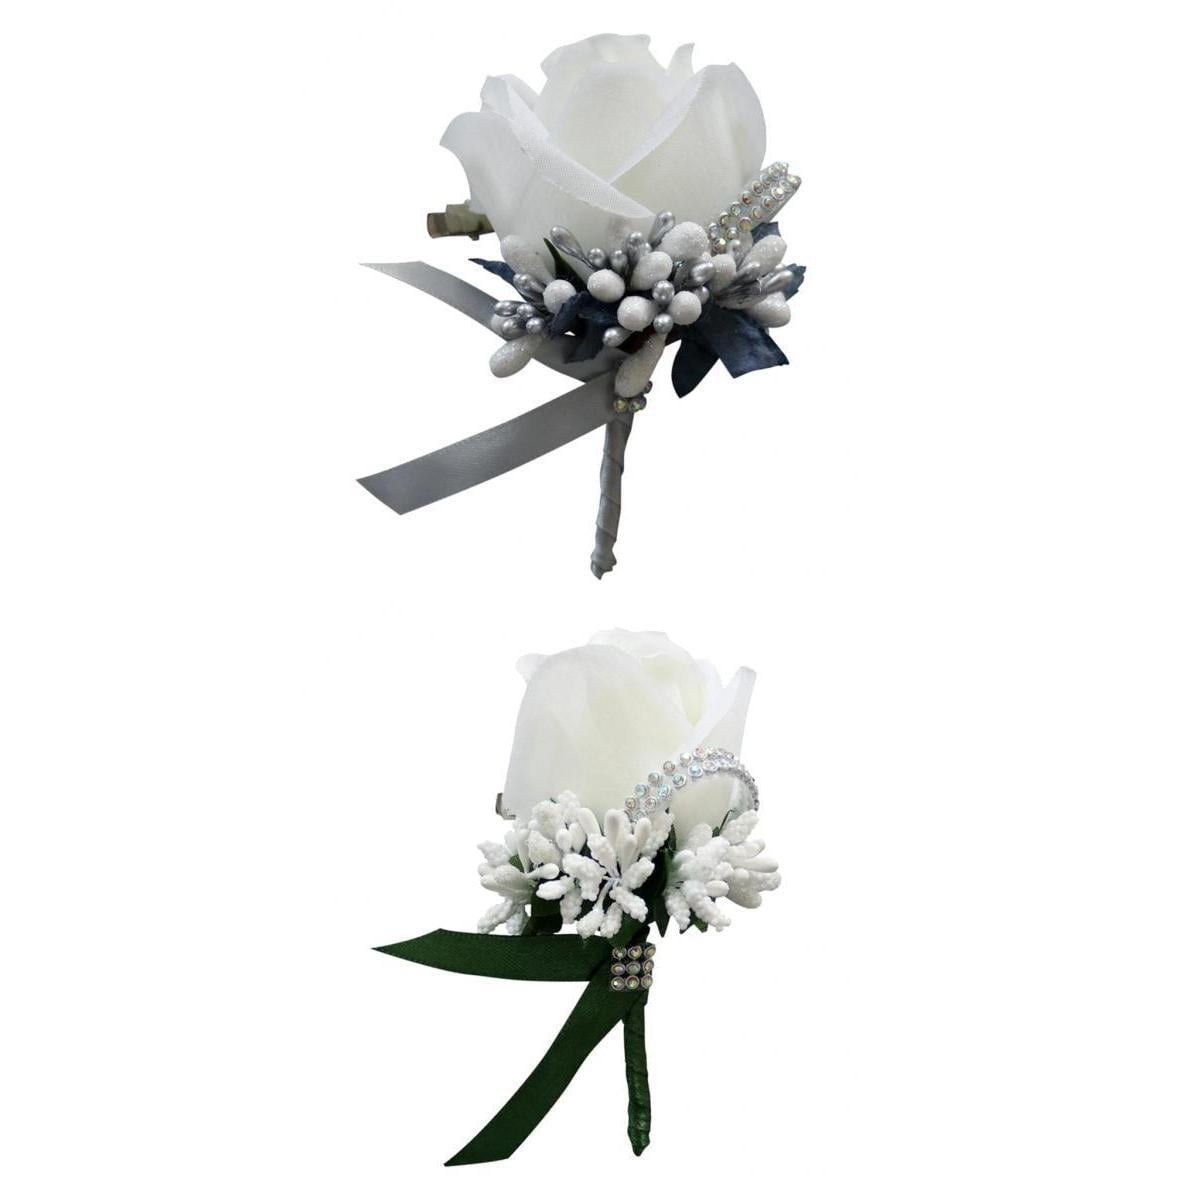 Rose Bouton Corsage Bride Groom Brooch Wedding Decor Simulated Silk Flower nEW 